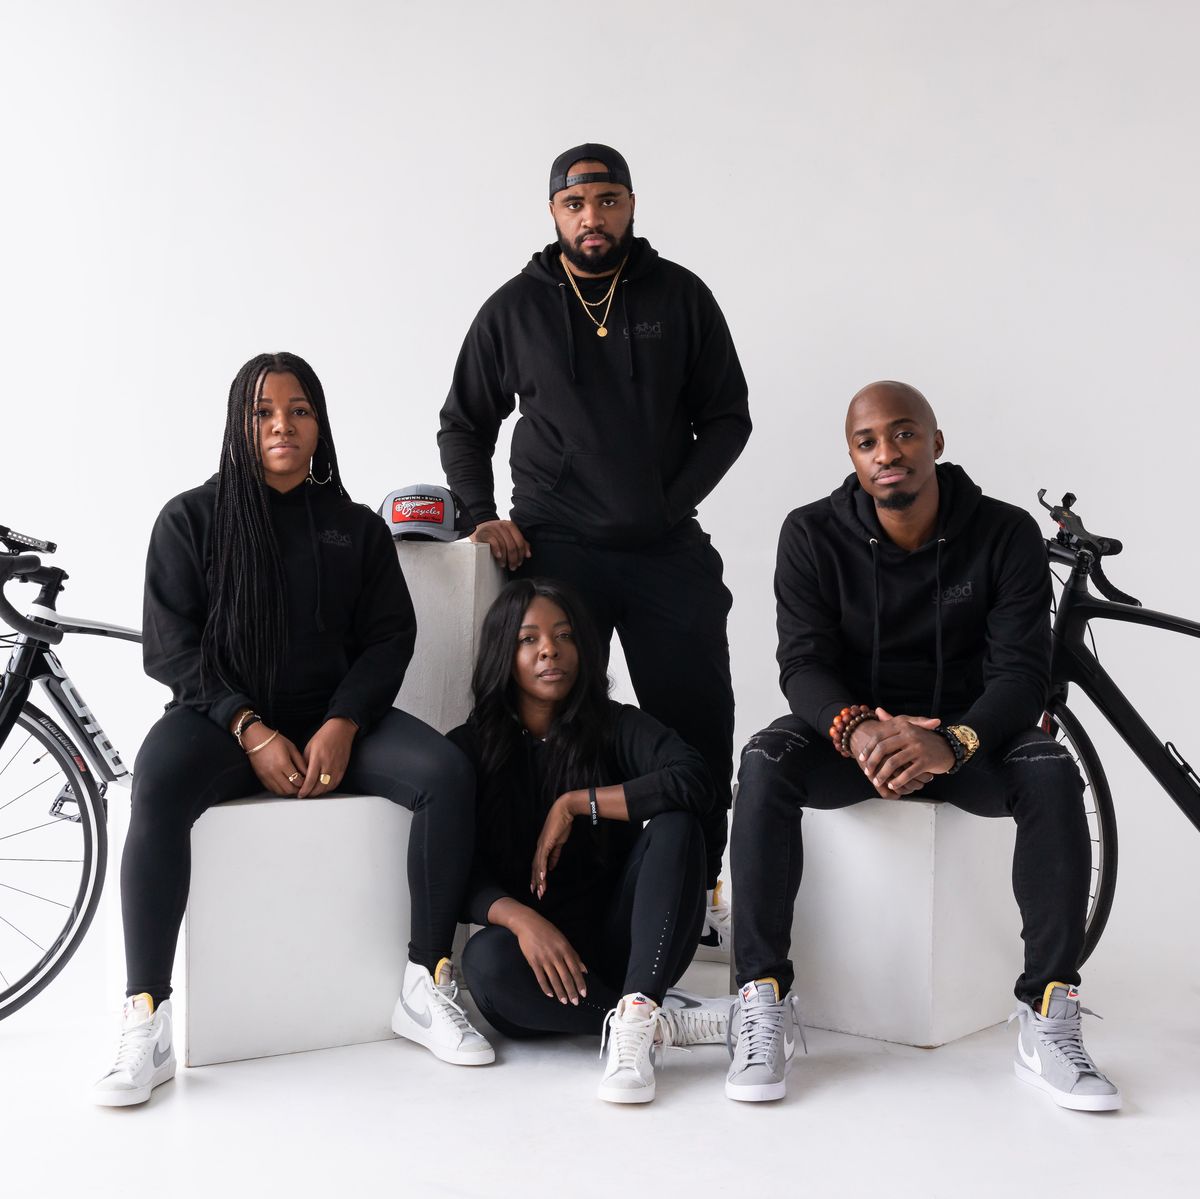 the four founders of good company bike club